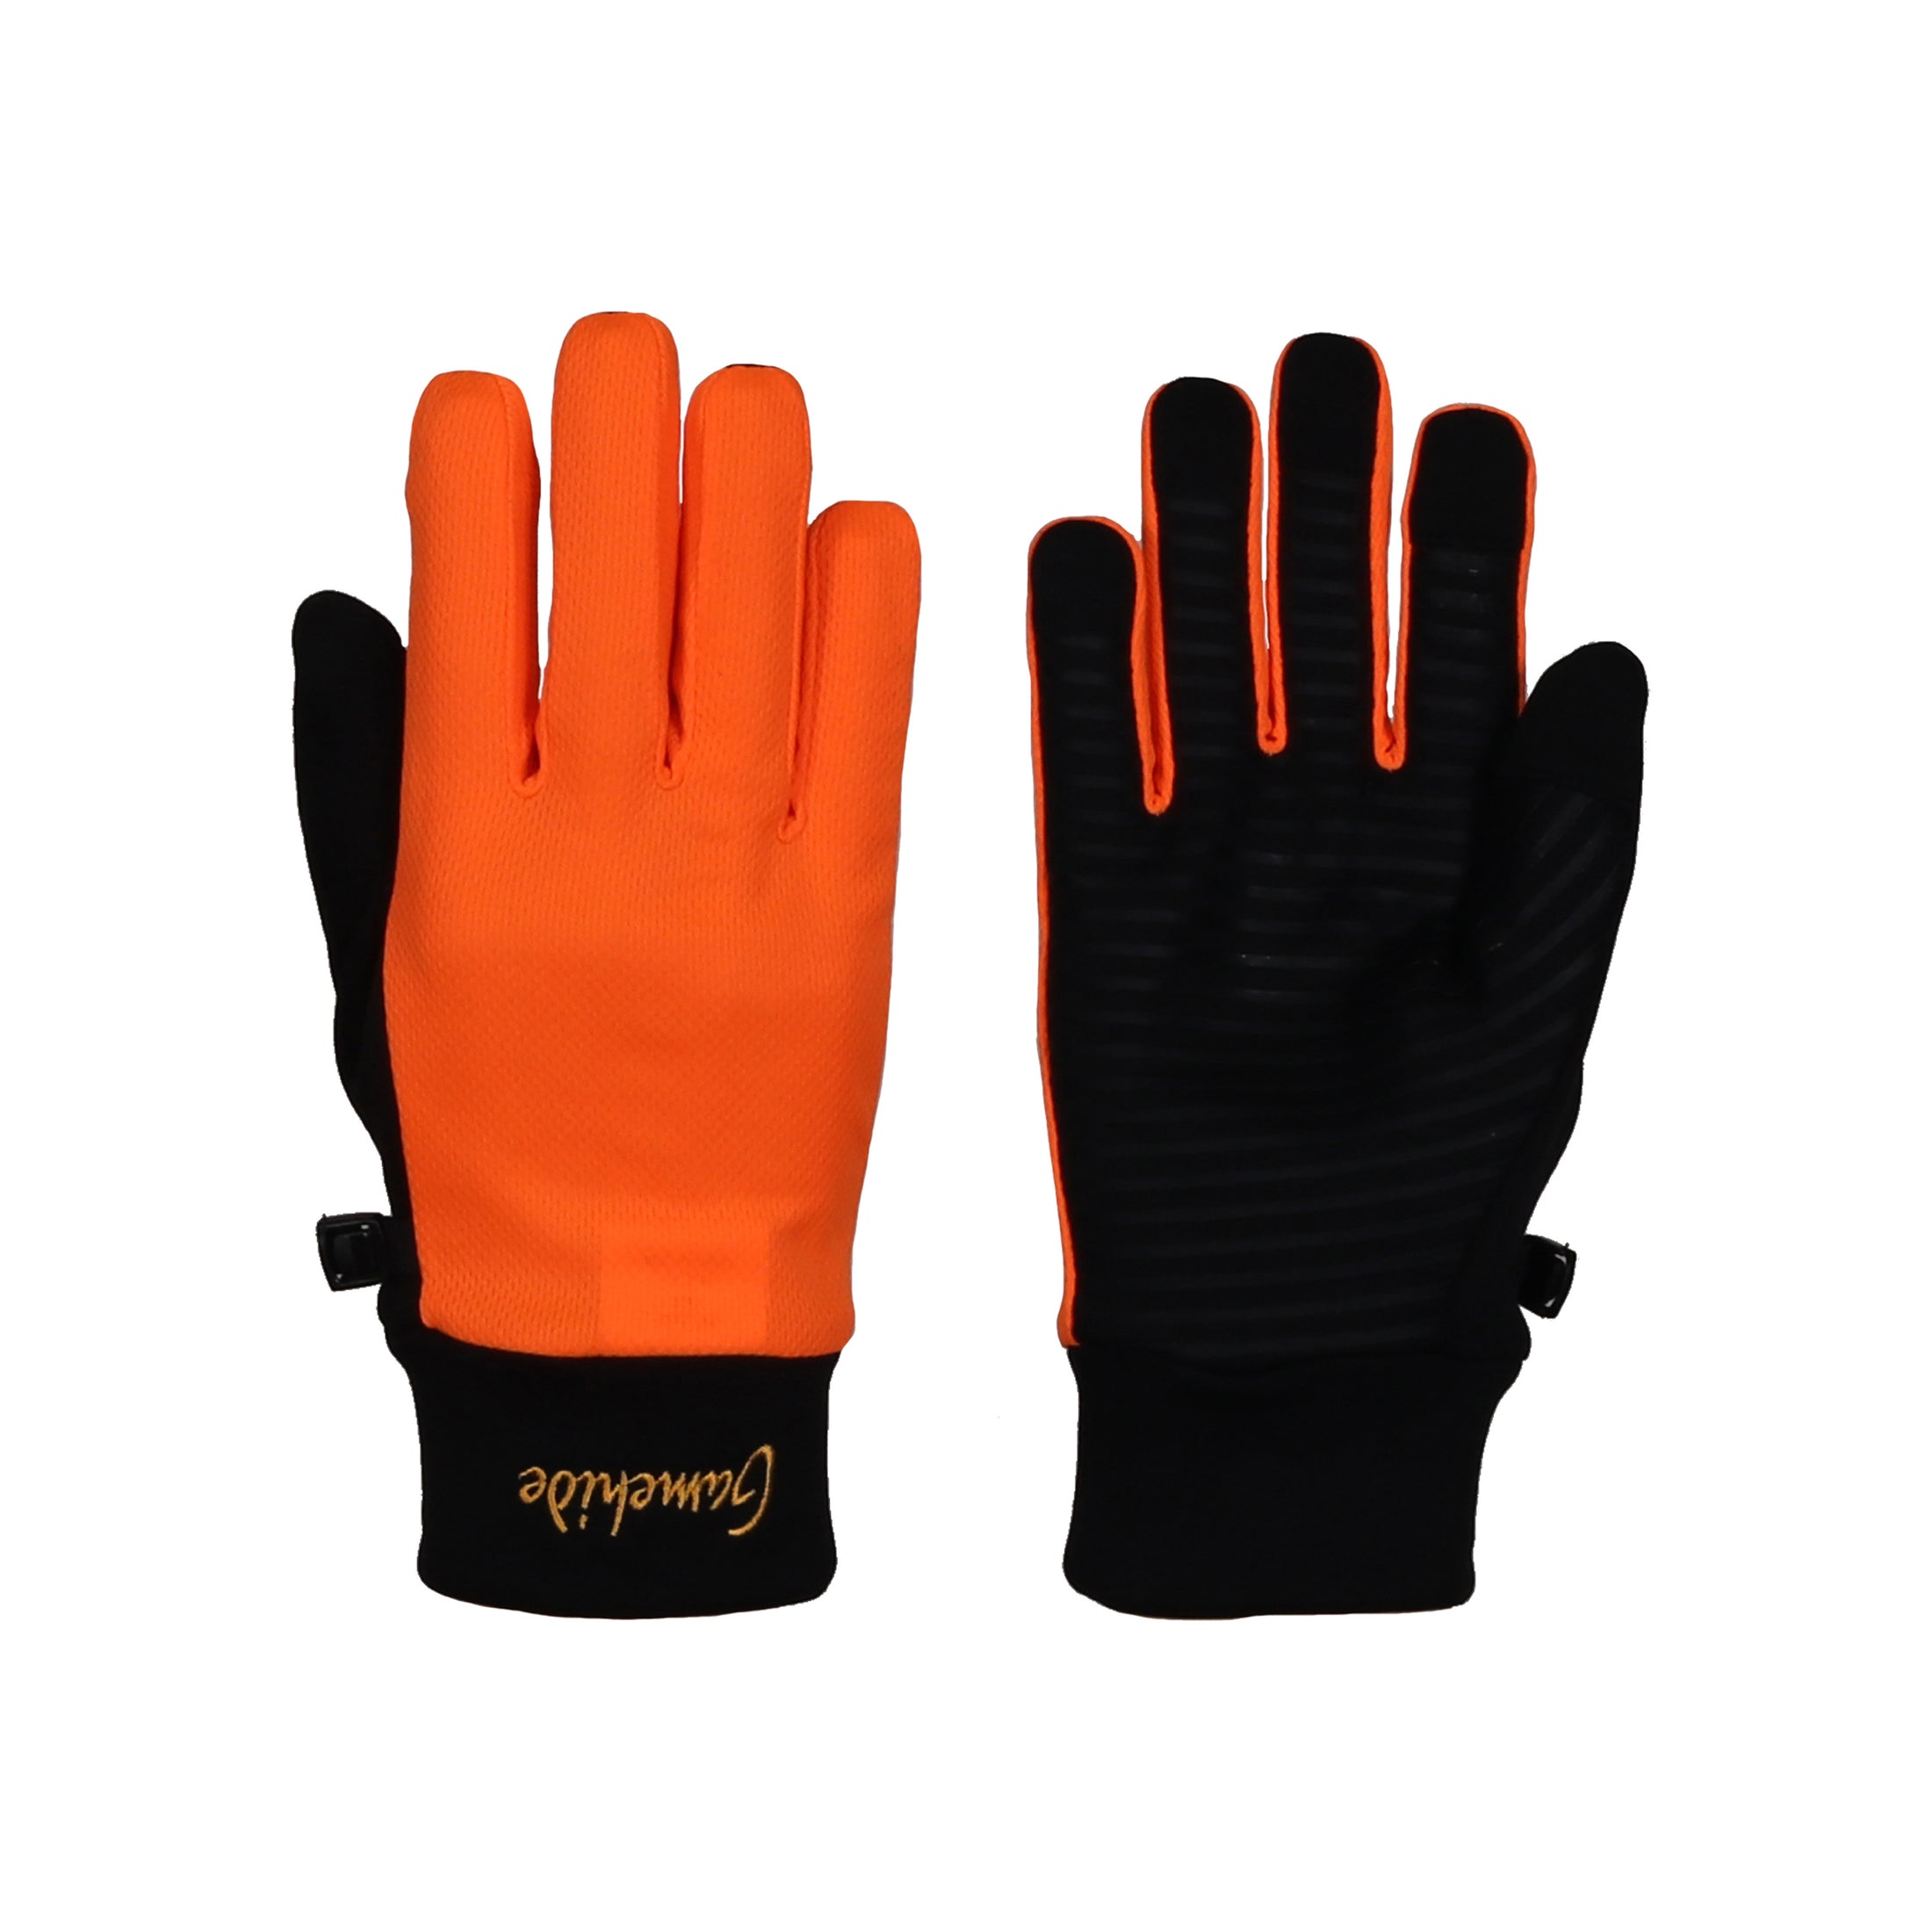 gamehide ultimate hunt glove (orange)